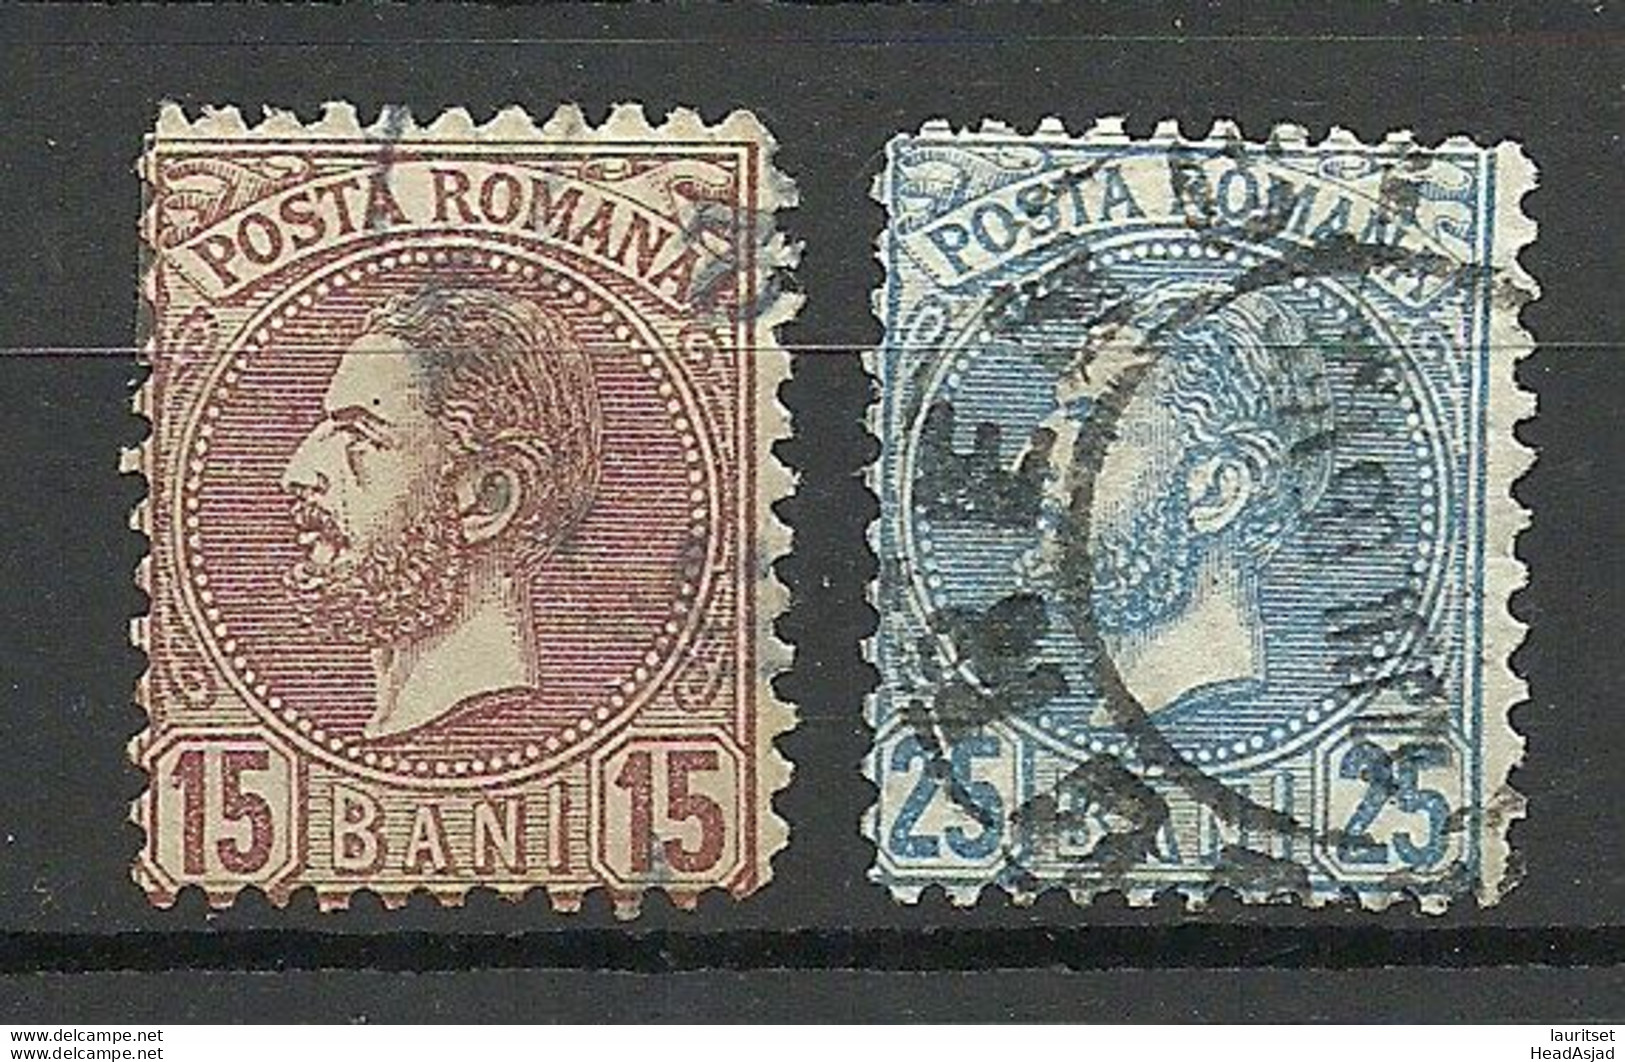 ROMANIA Rumänien 1880 Michel 55 - 56 O - 1858-1880 Moldavia & Principality